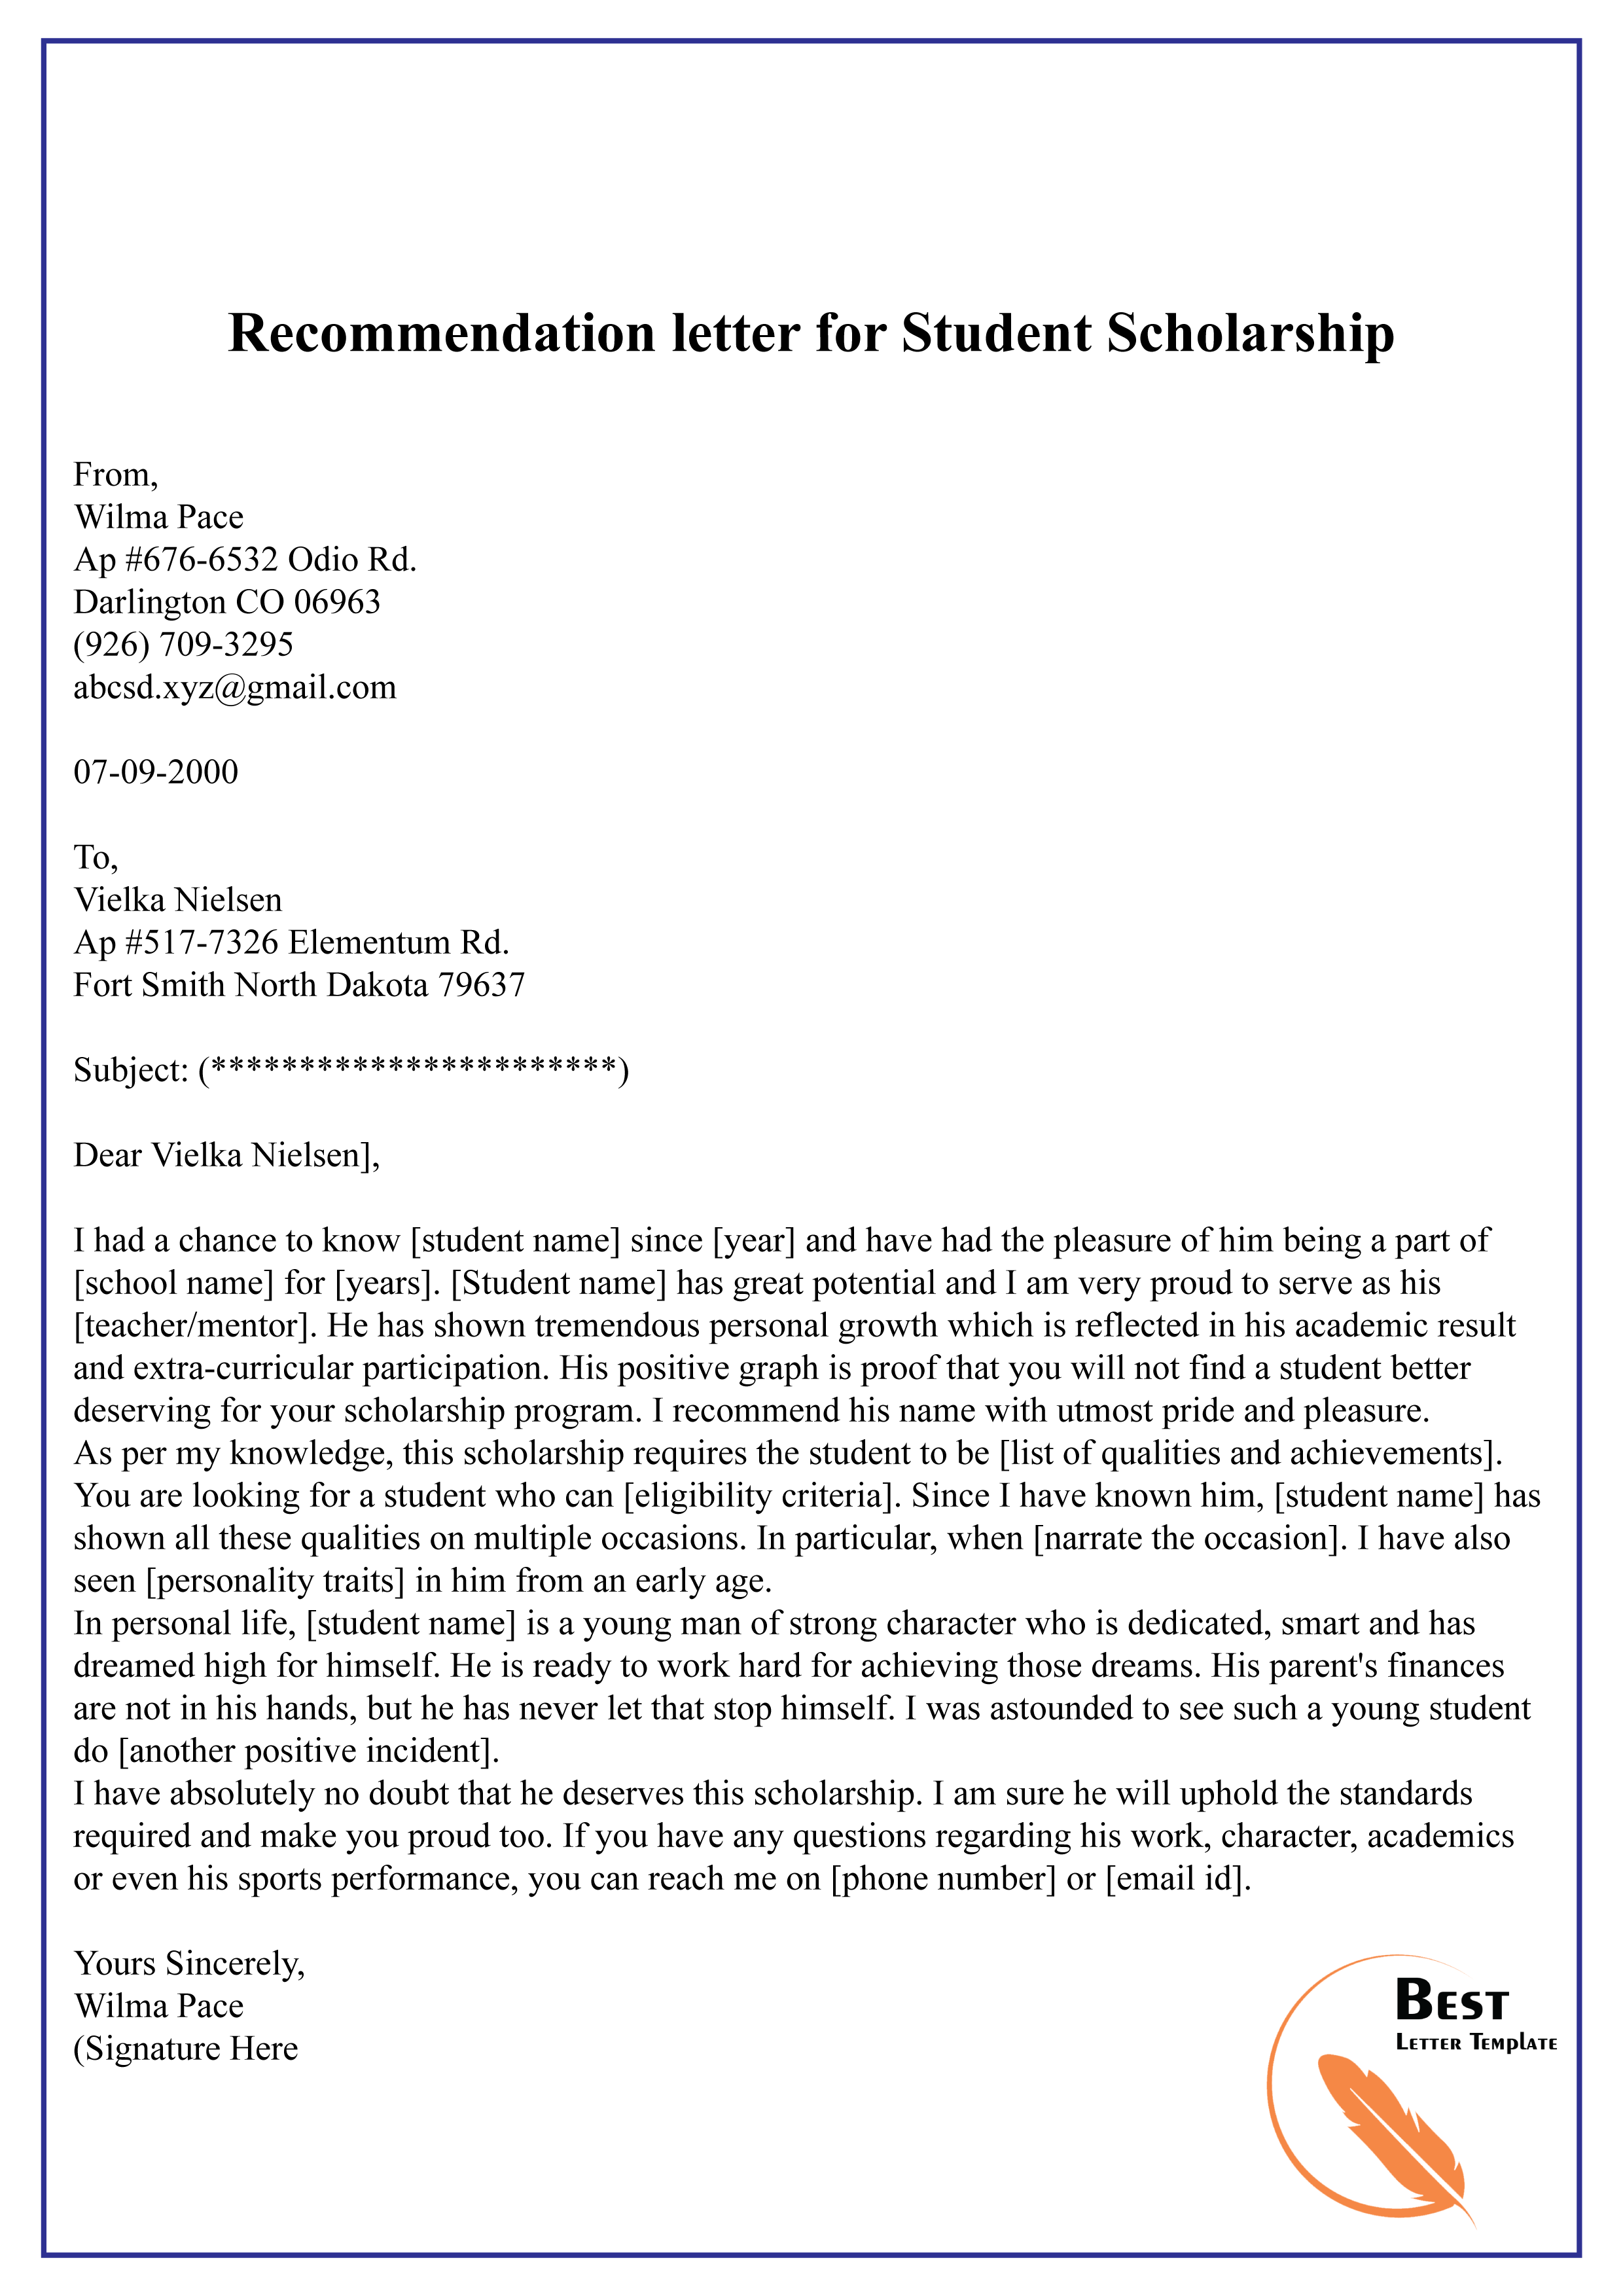 Recommendation letter for Student Scholarship 01 Best Letter Template